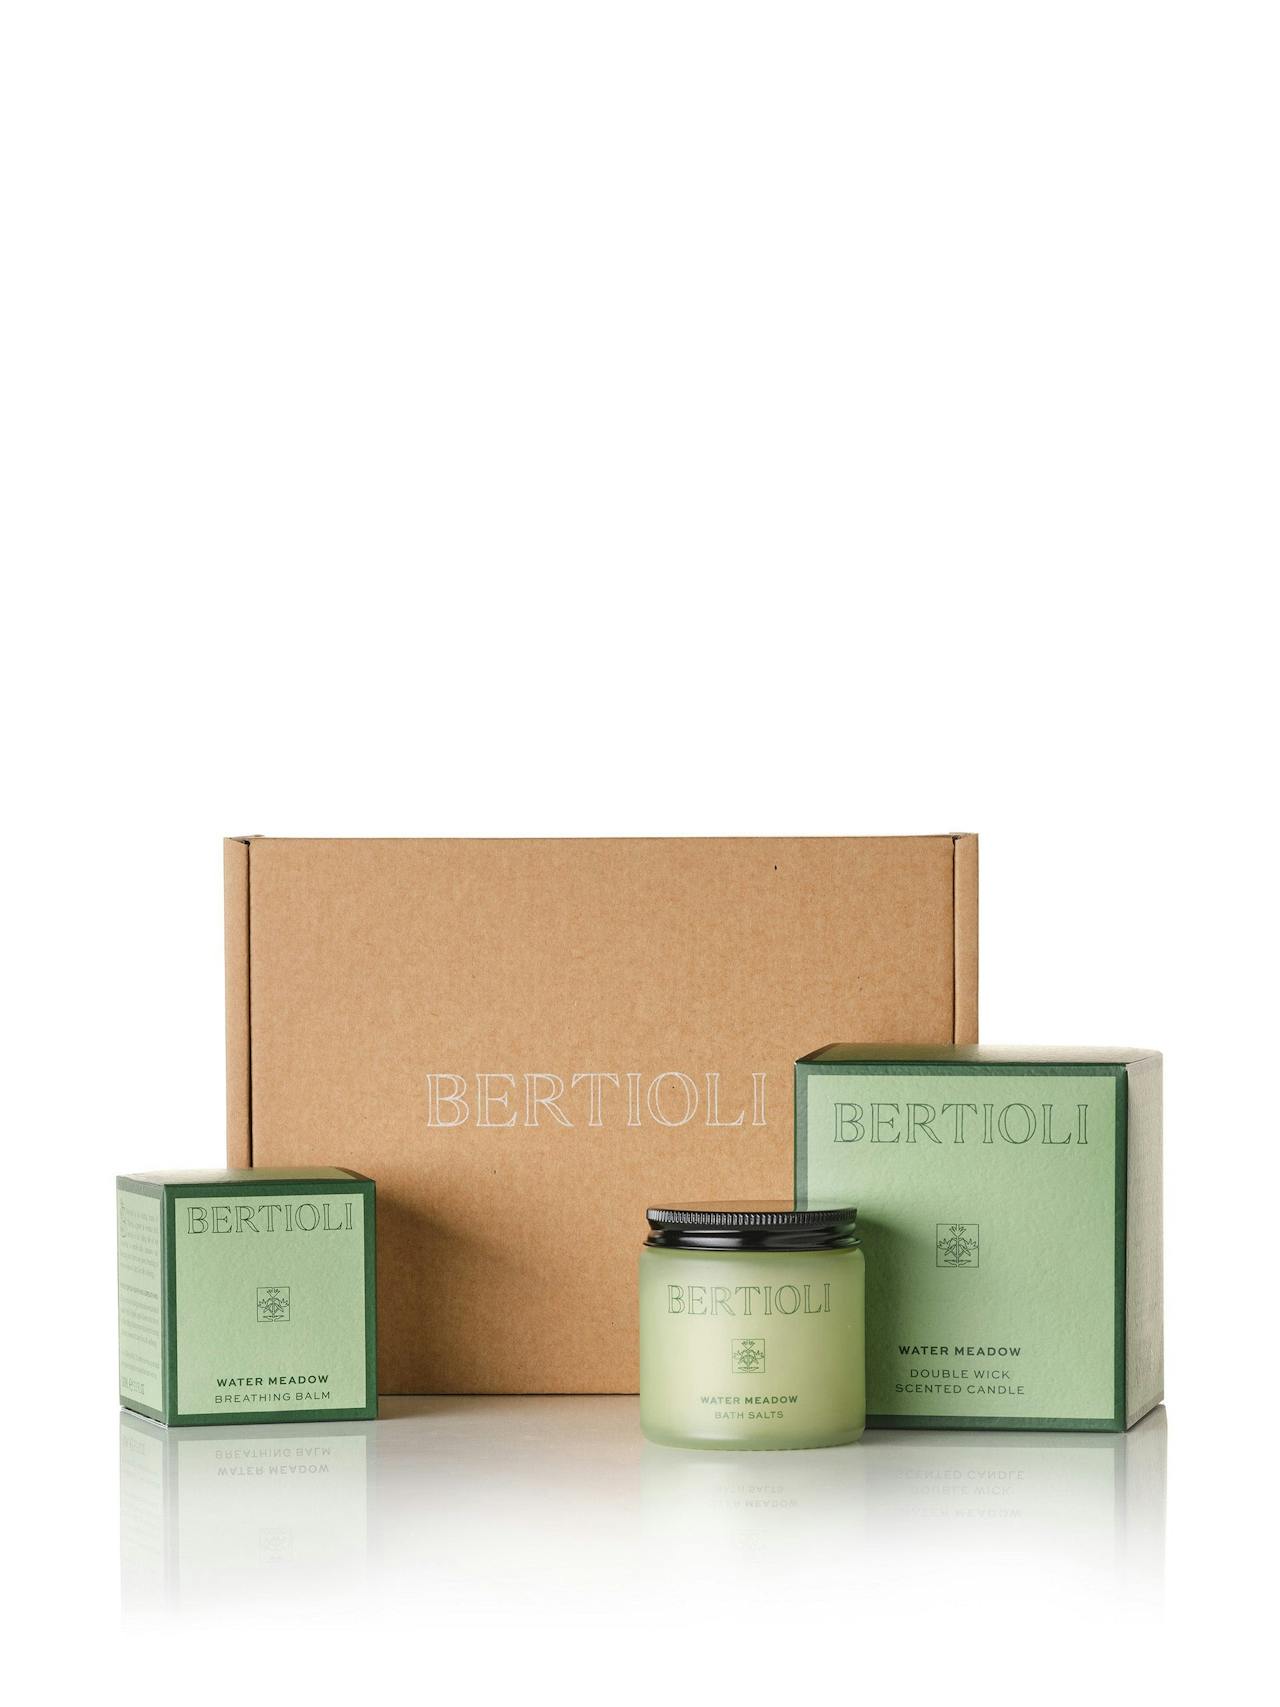 The Bertioli bathing gift box